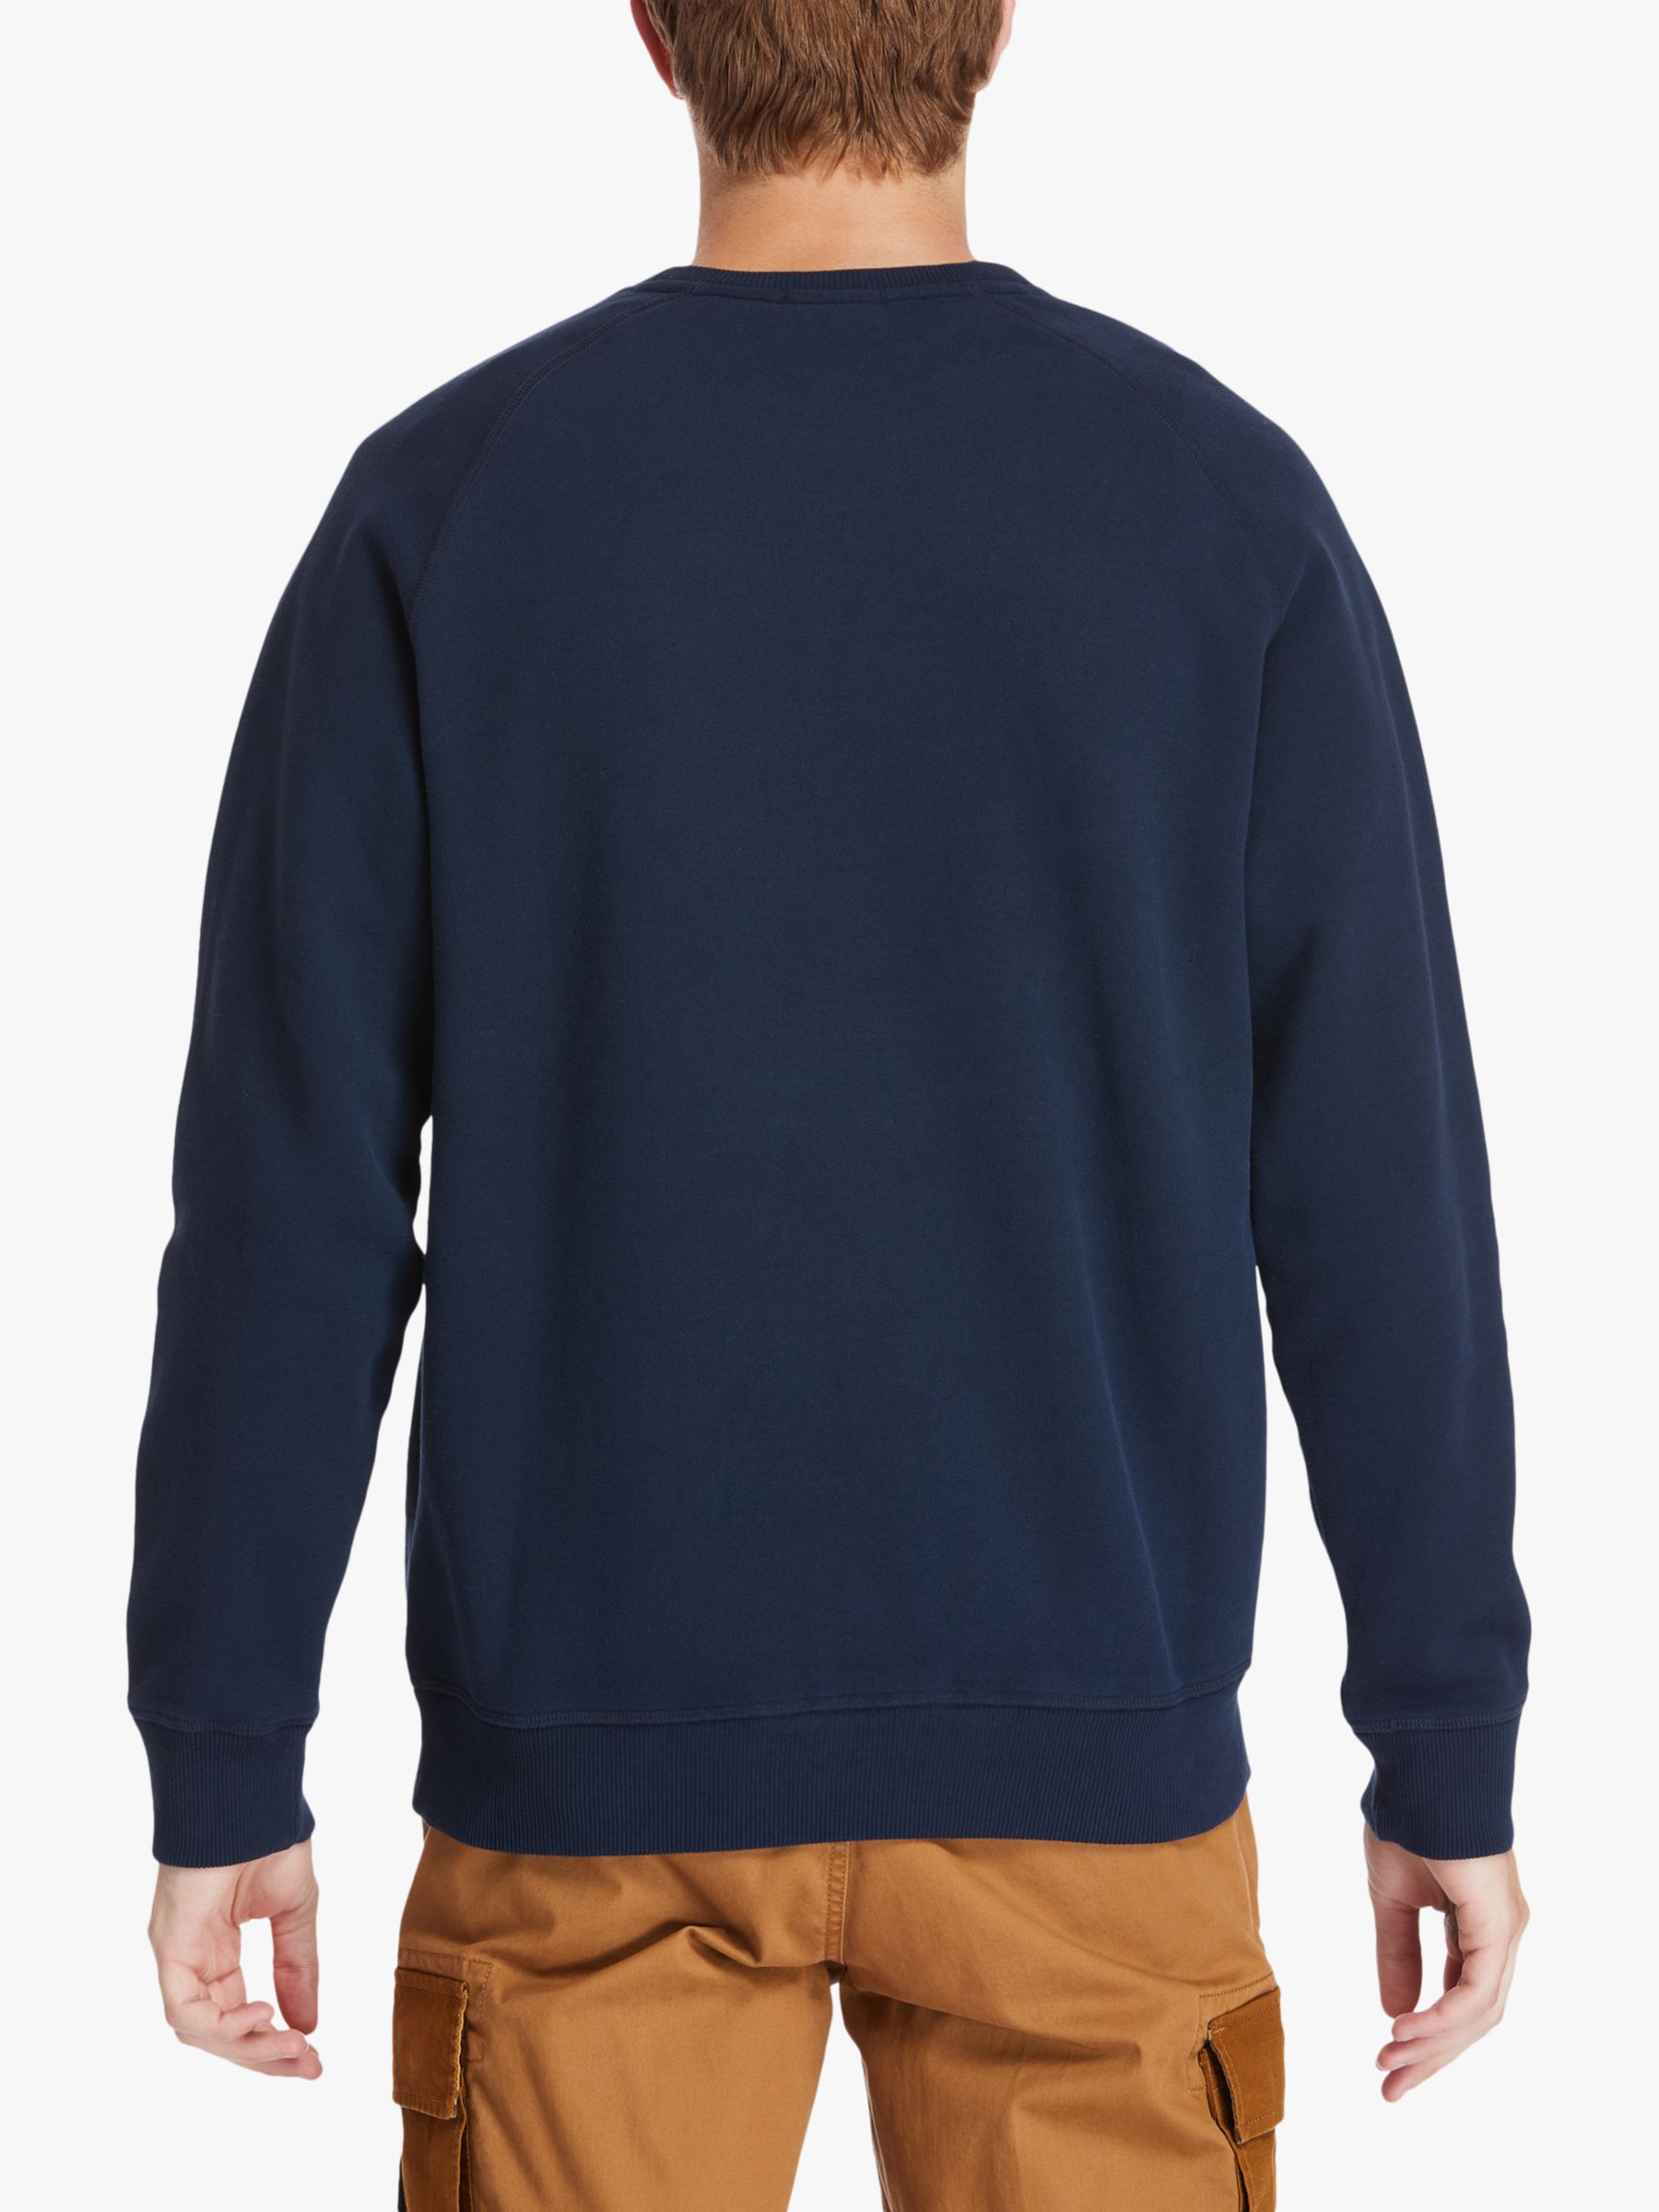 Buy Timberland Exeter River Basic Sweatshirt Online at johnlewis.com